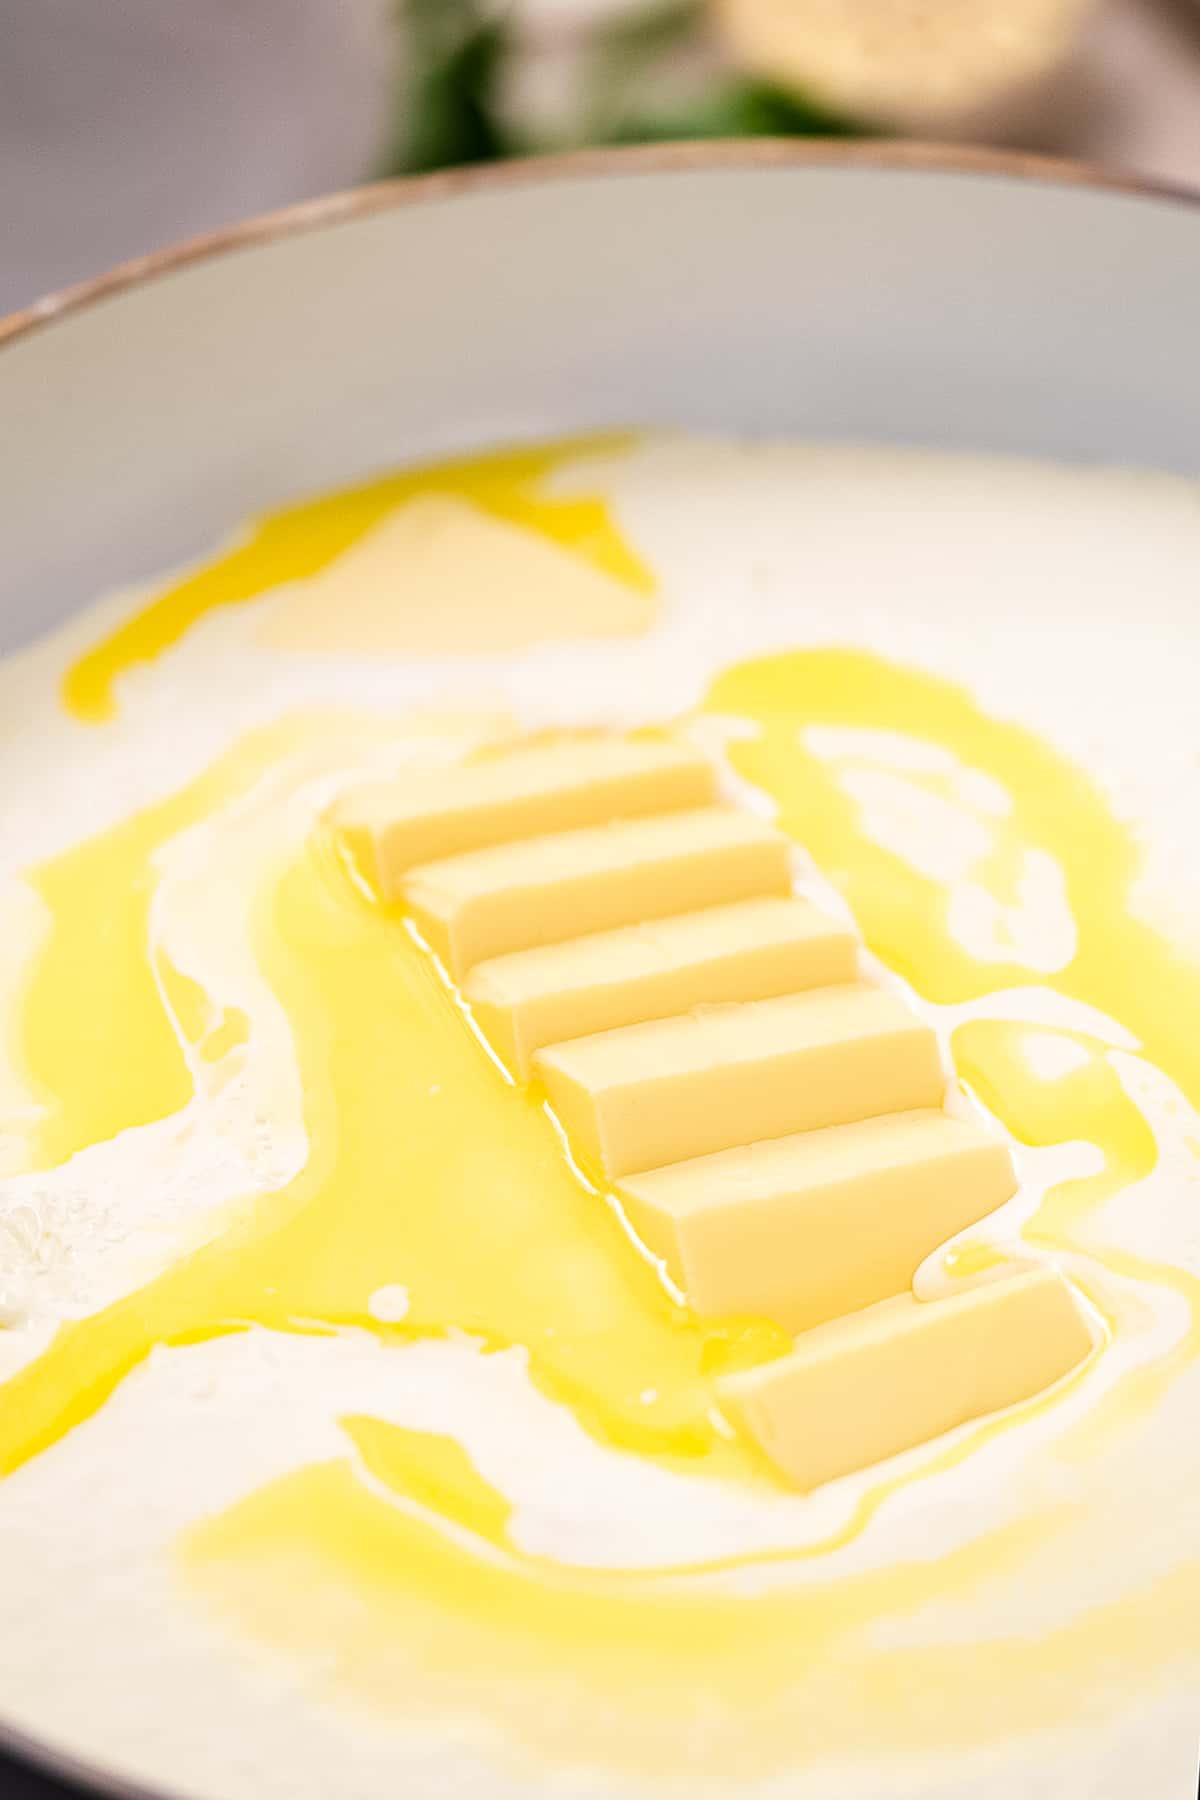 Butter melting in cream in skillet